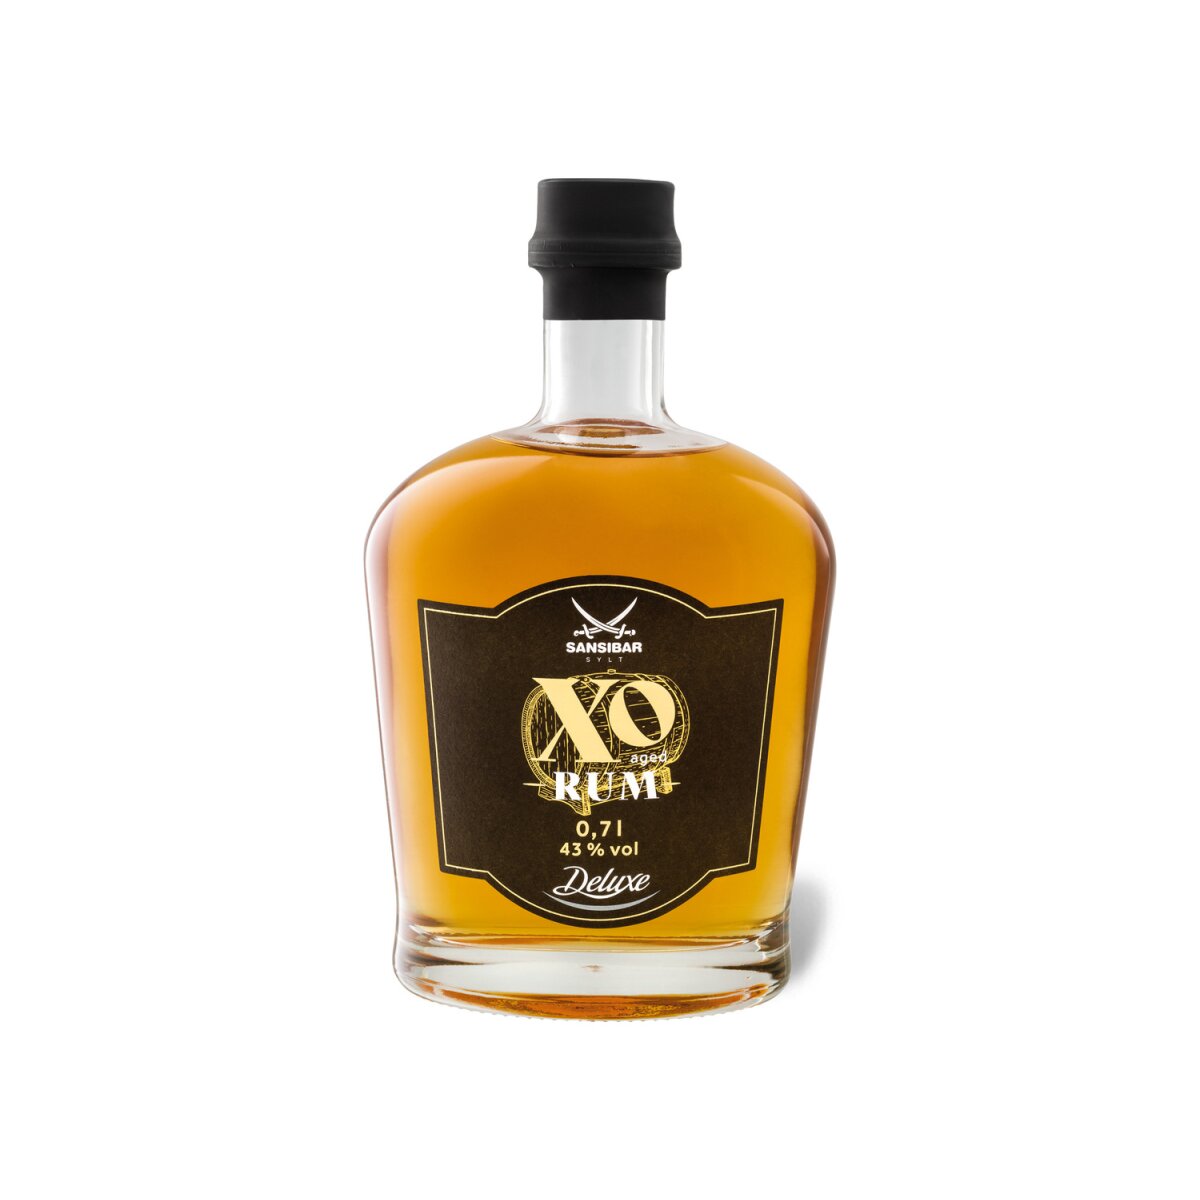 16,99 Vol, Sansibar Rum XO € Aged Deluxe 43%